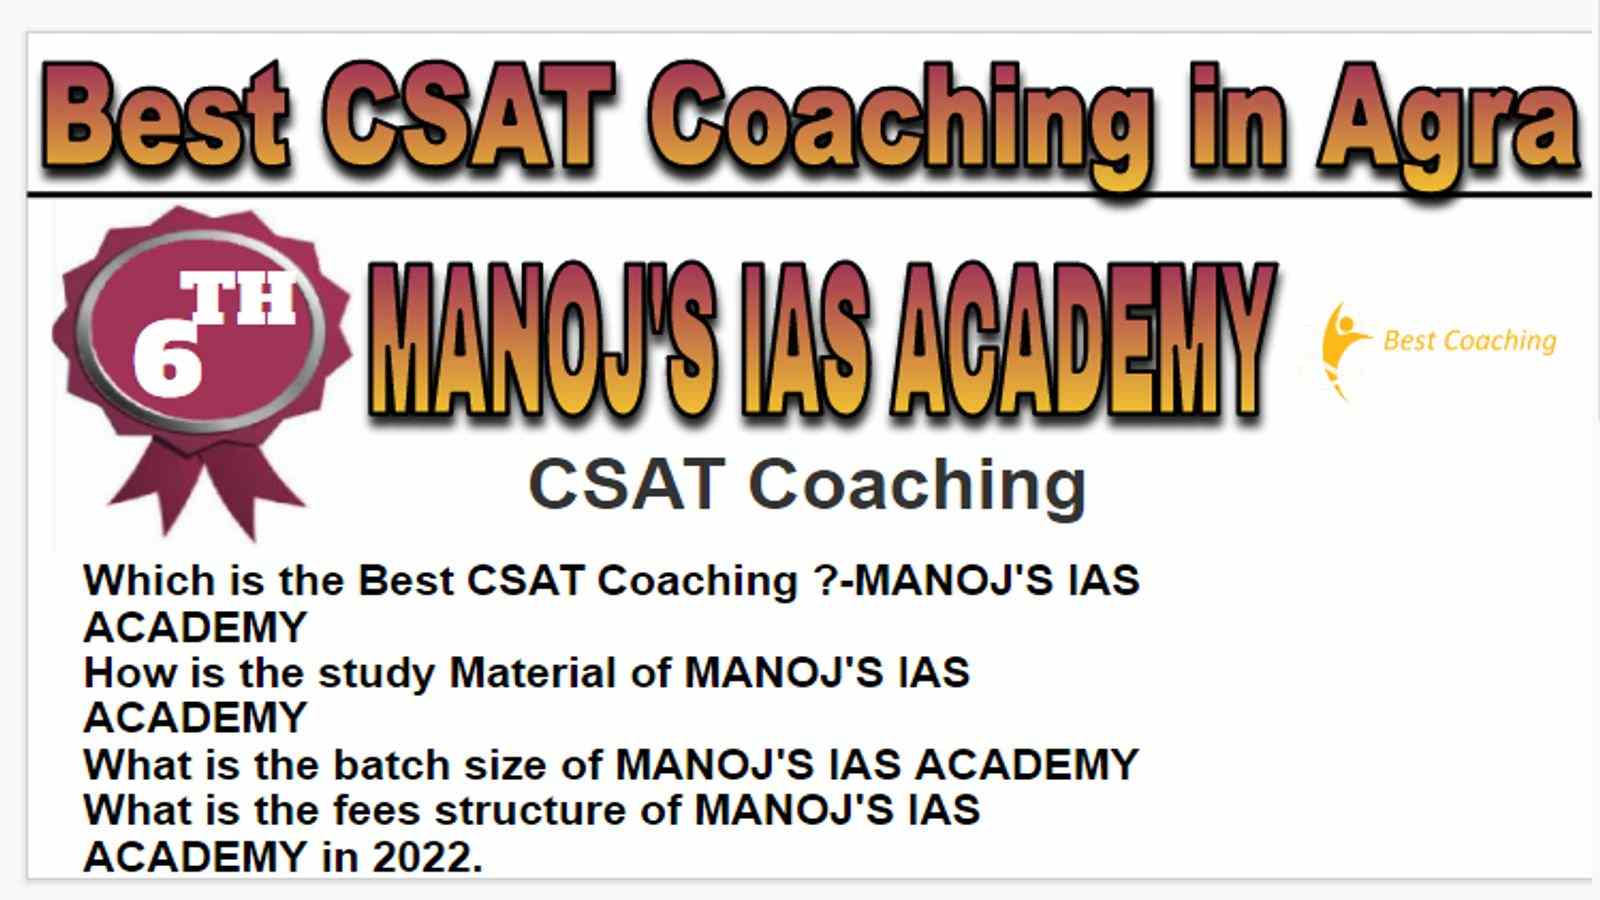 Rank 6 Best CSAT Coaching in Agra